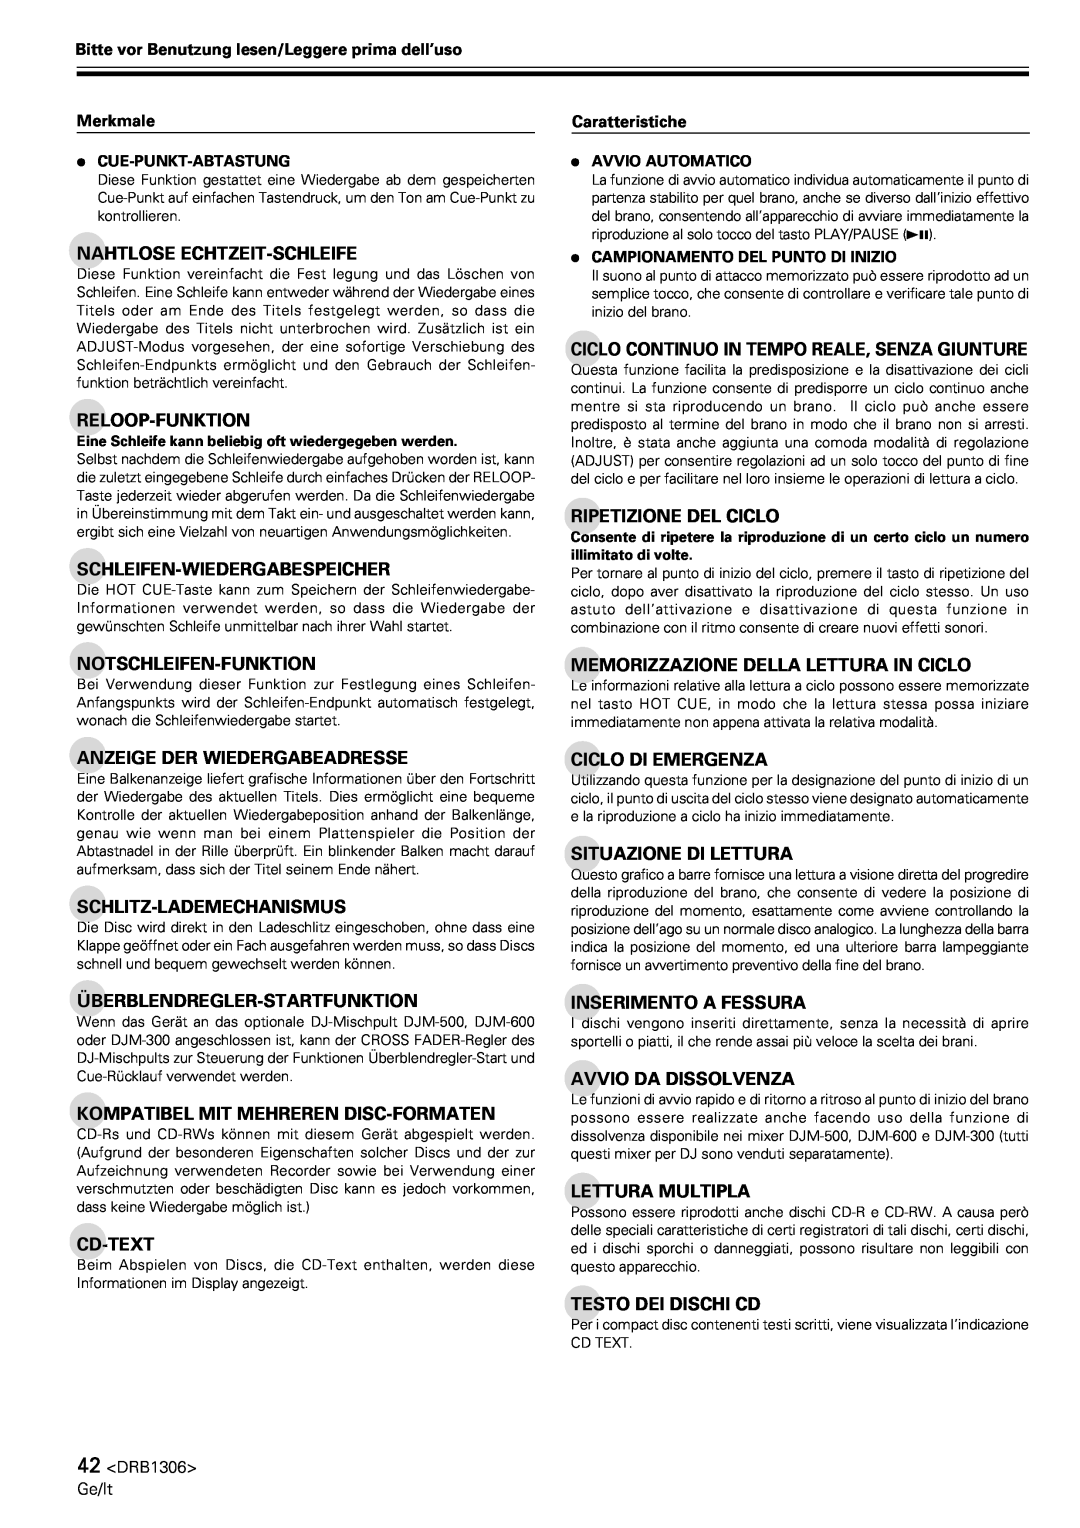 Pioneer CMX-3000 operating instructions Nahtlose Echtzeit-Schleife 